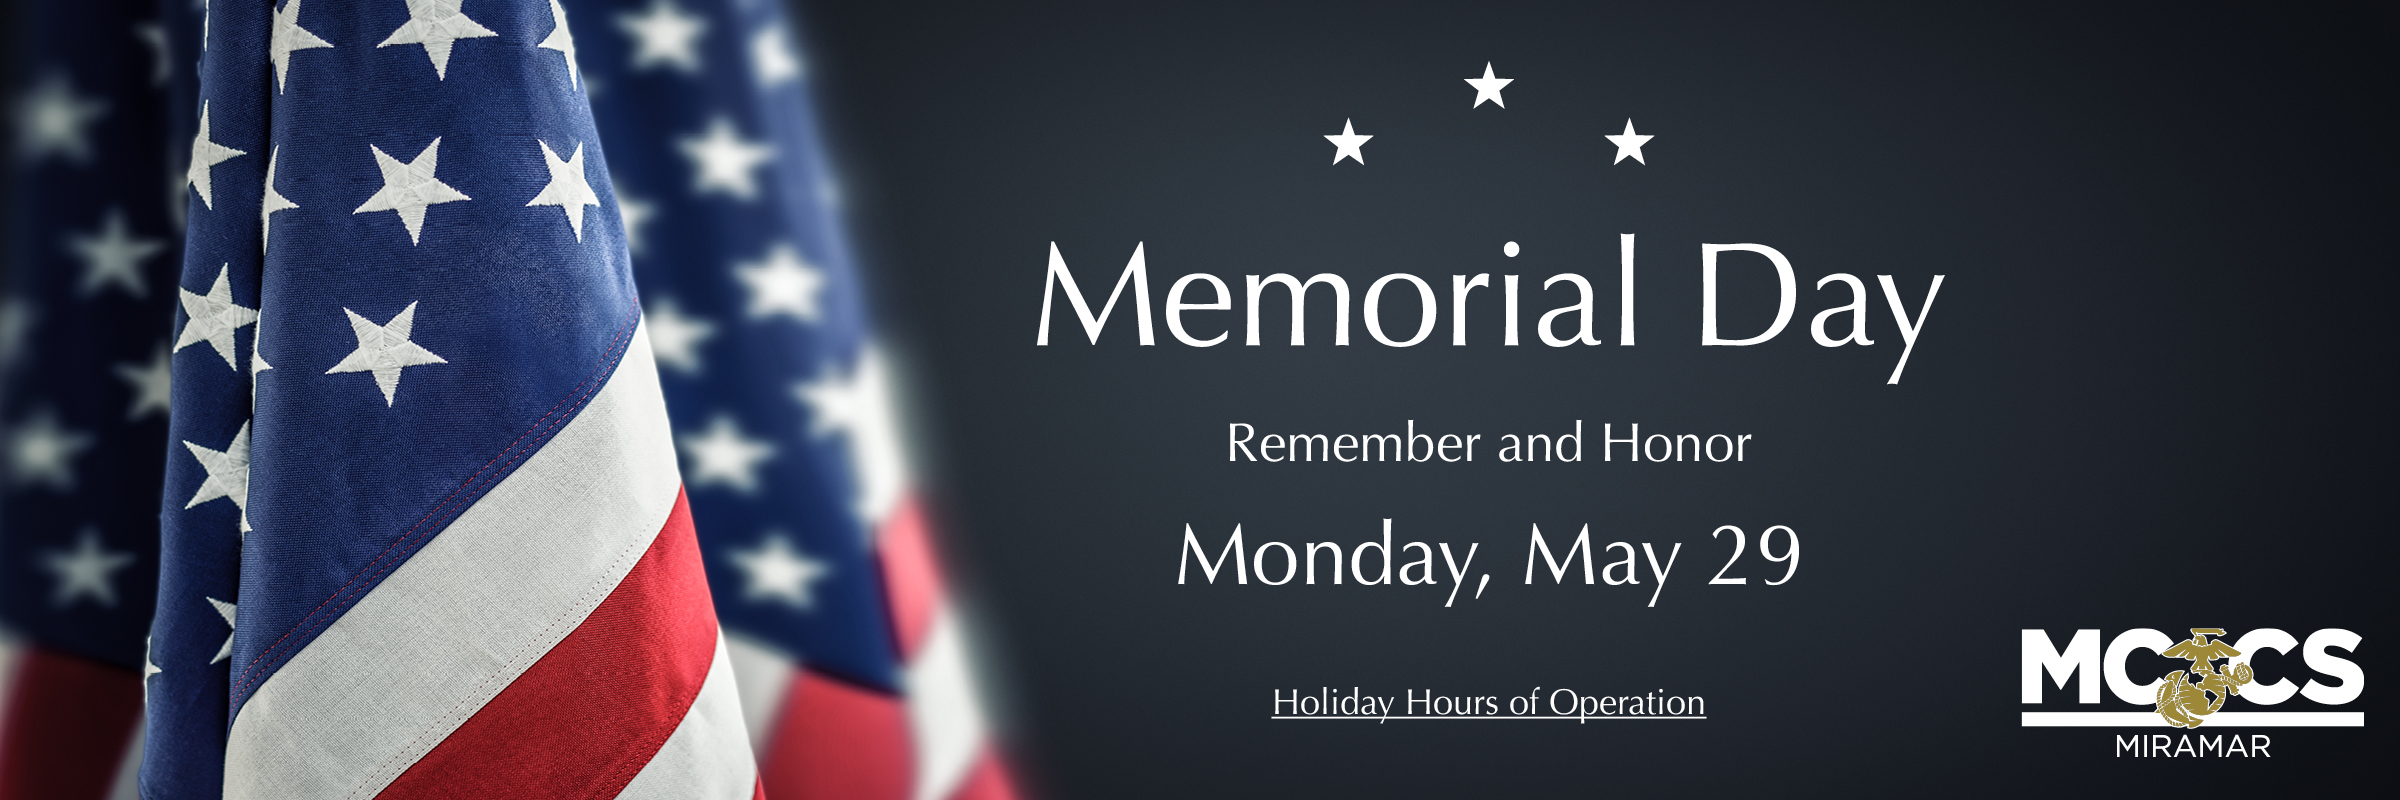 2023 MCCS Miramar Memorial Day Holiday Hours of Operation homepage slide.jpg